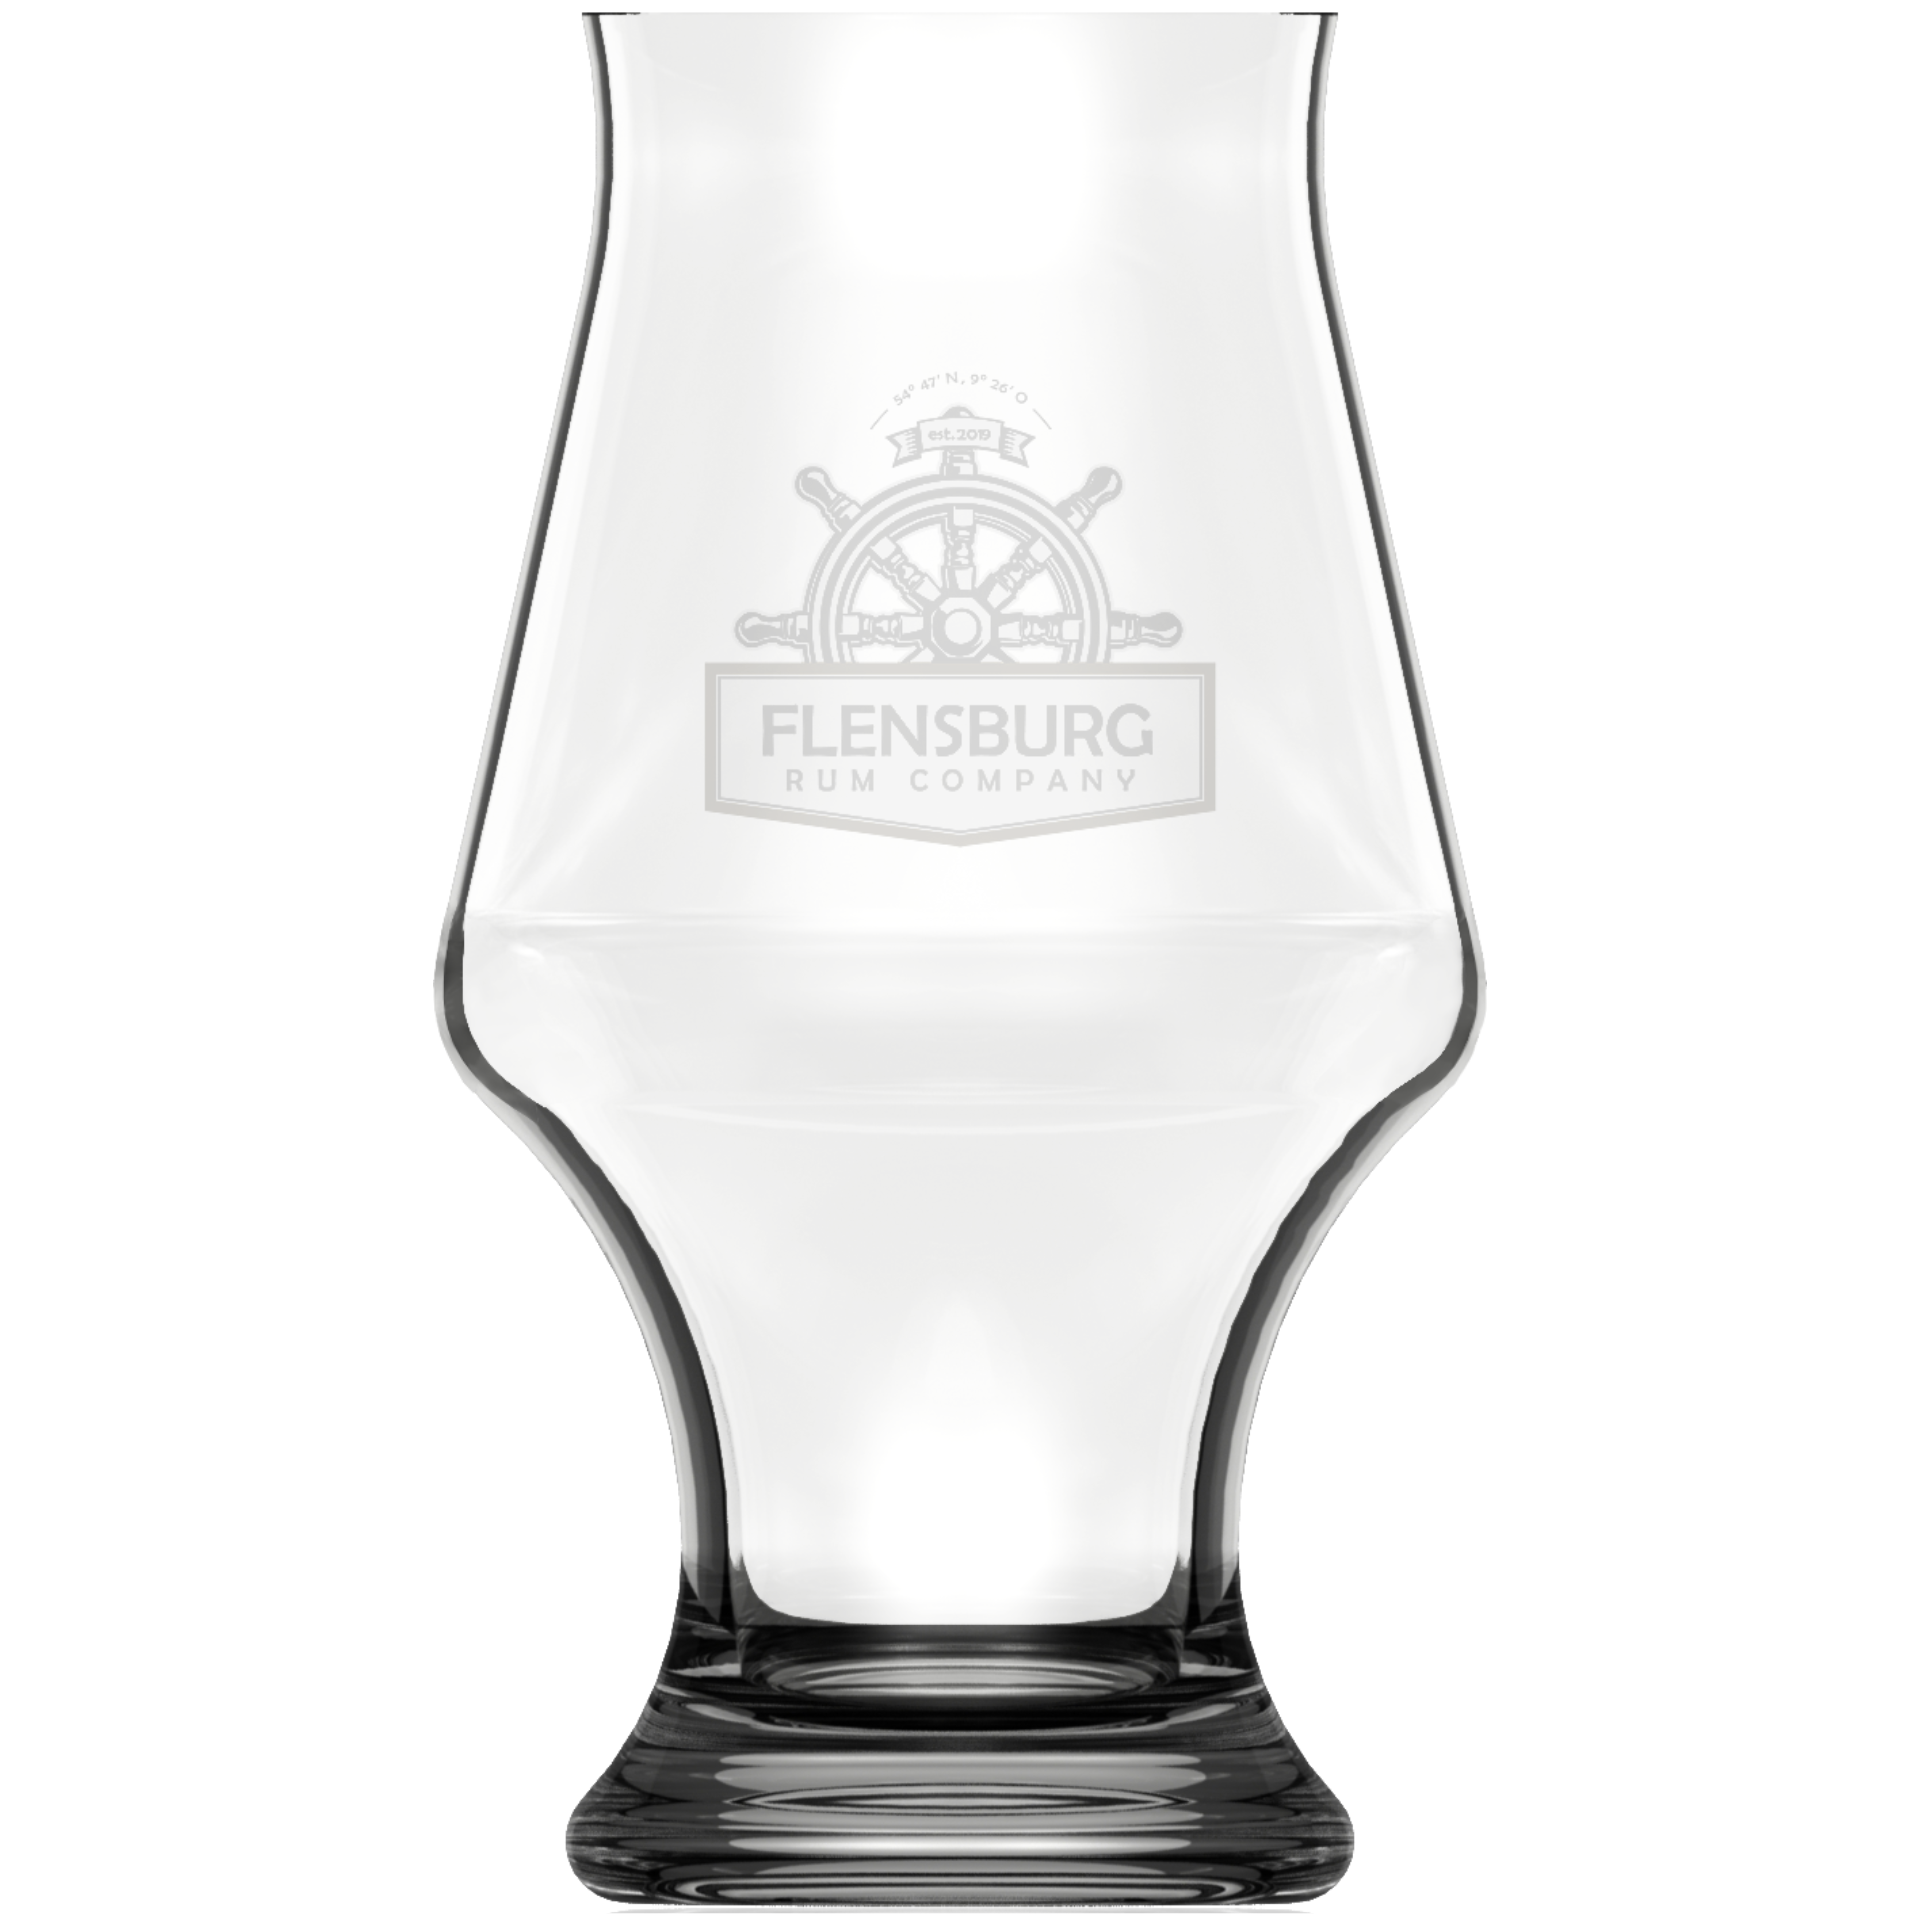 Flensburg Rum Company Nosingglas "Taste One"